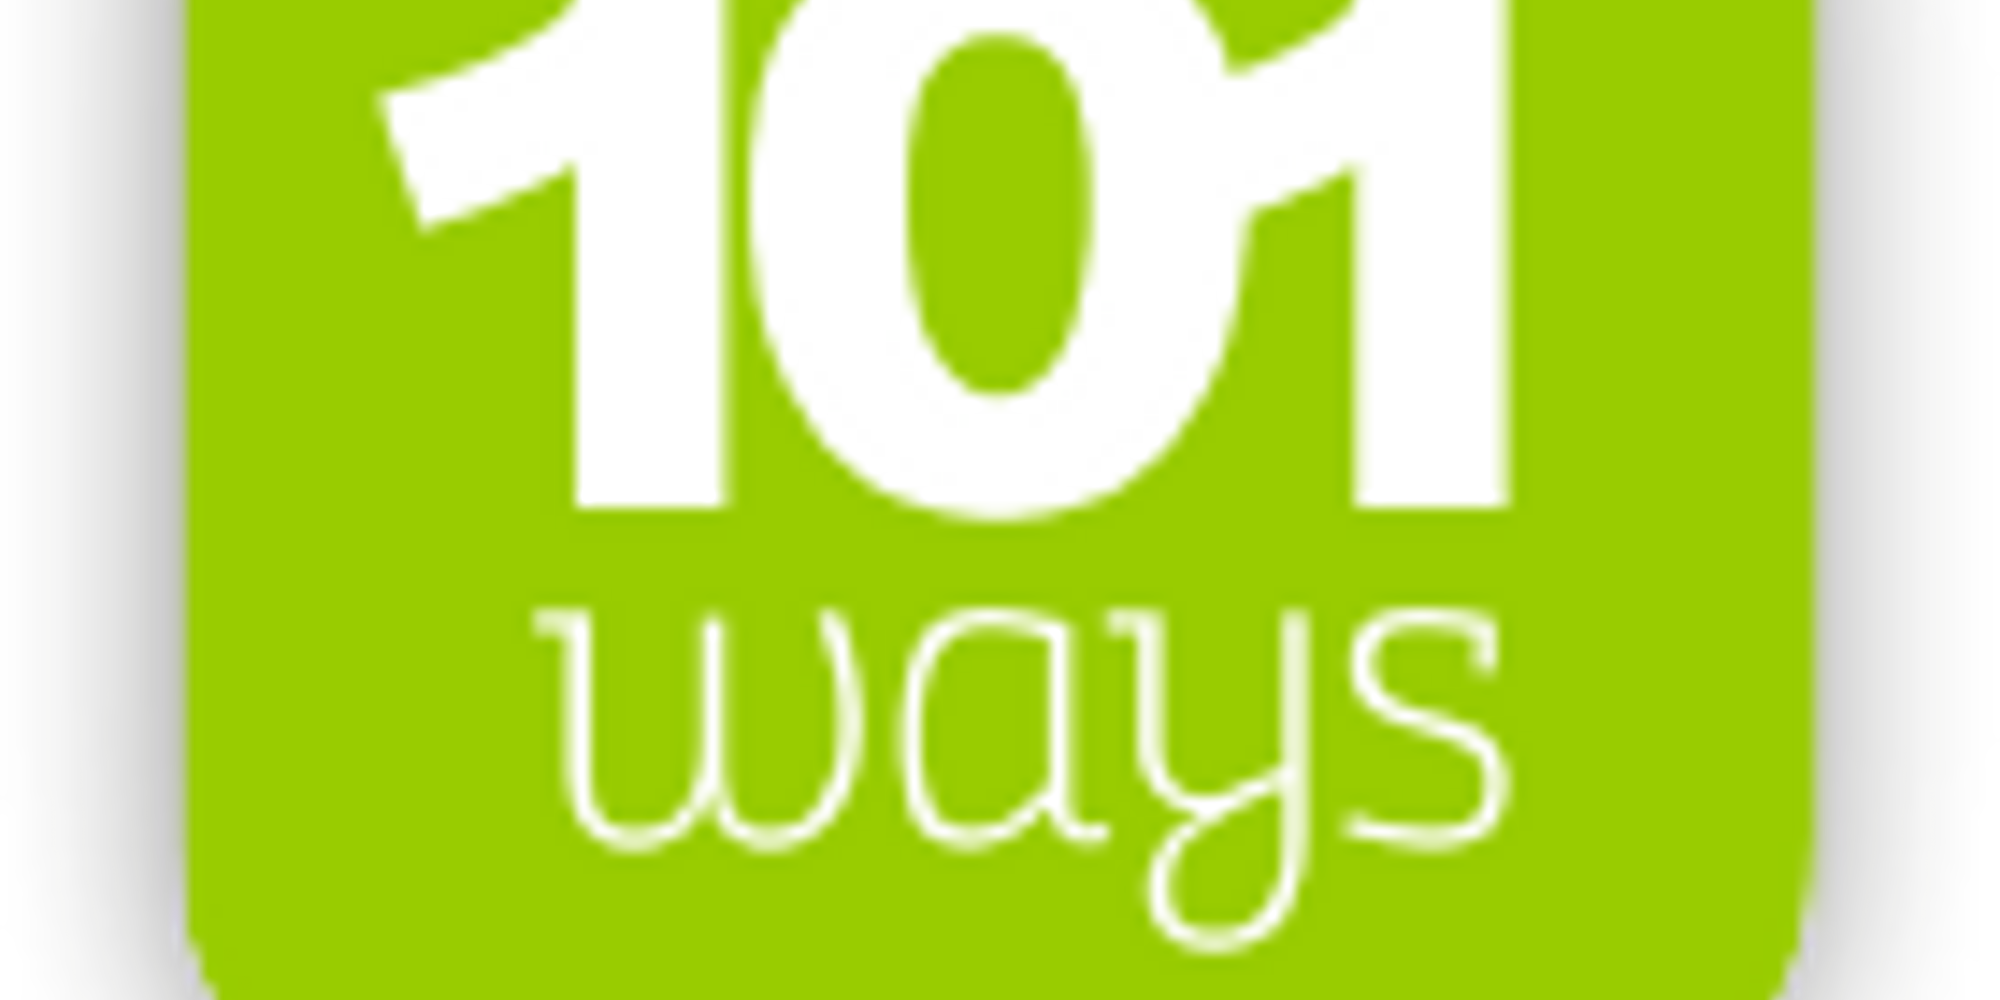 101 Ways Logo